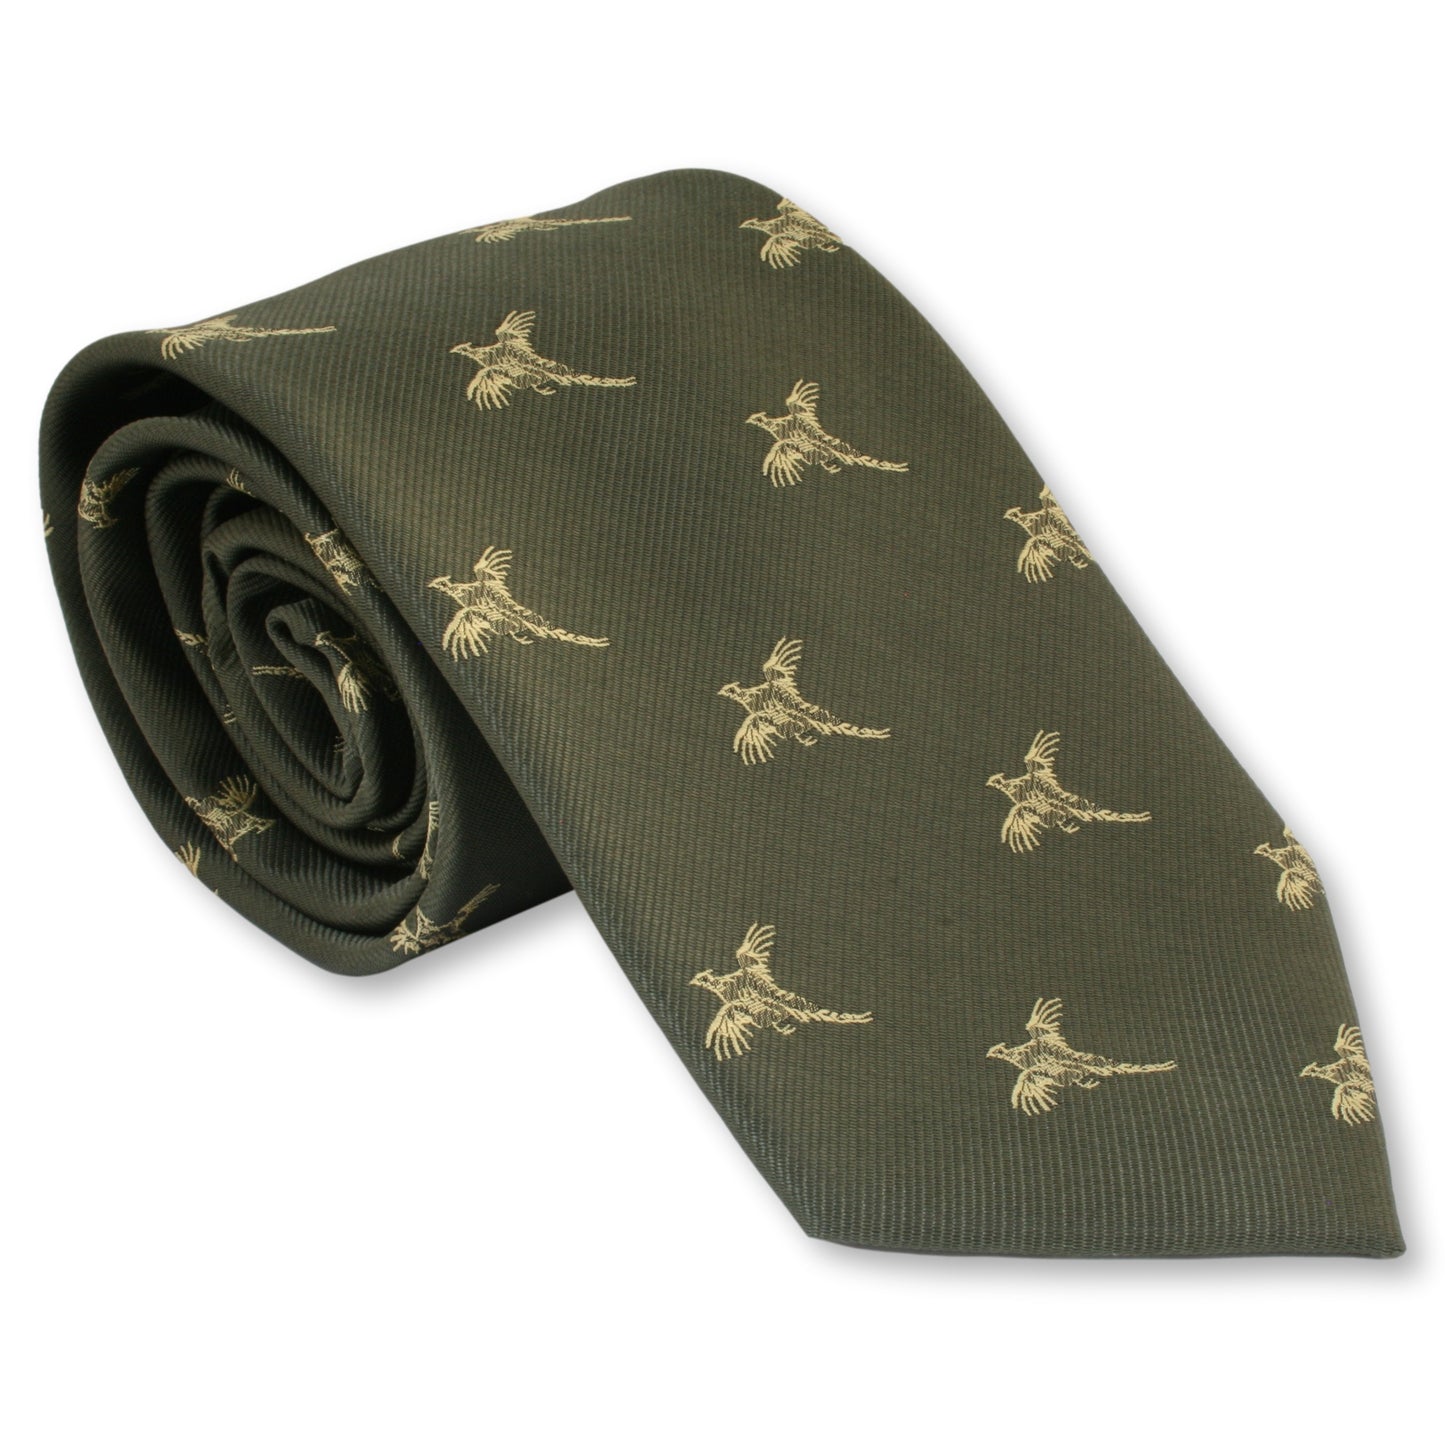 Green Pheasant Tie gamekeepers Cottage Gifts